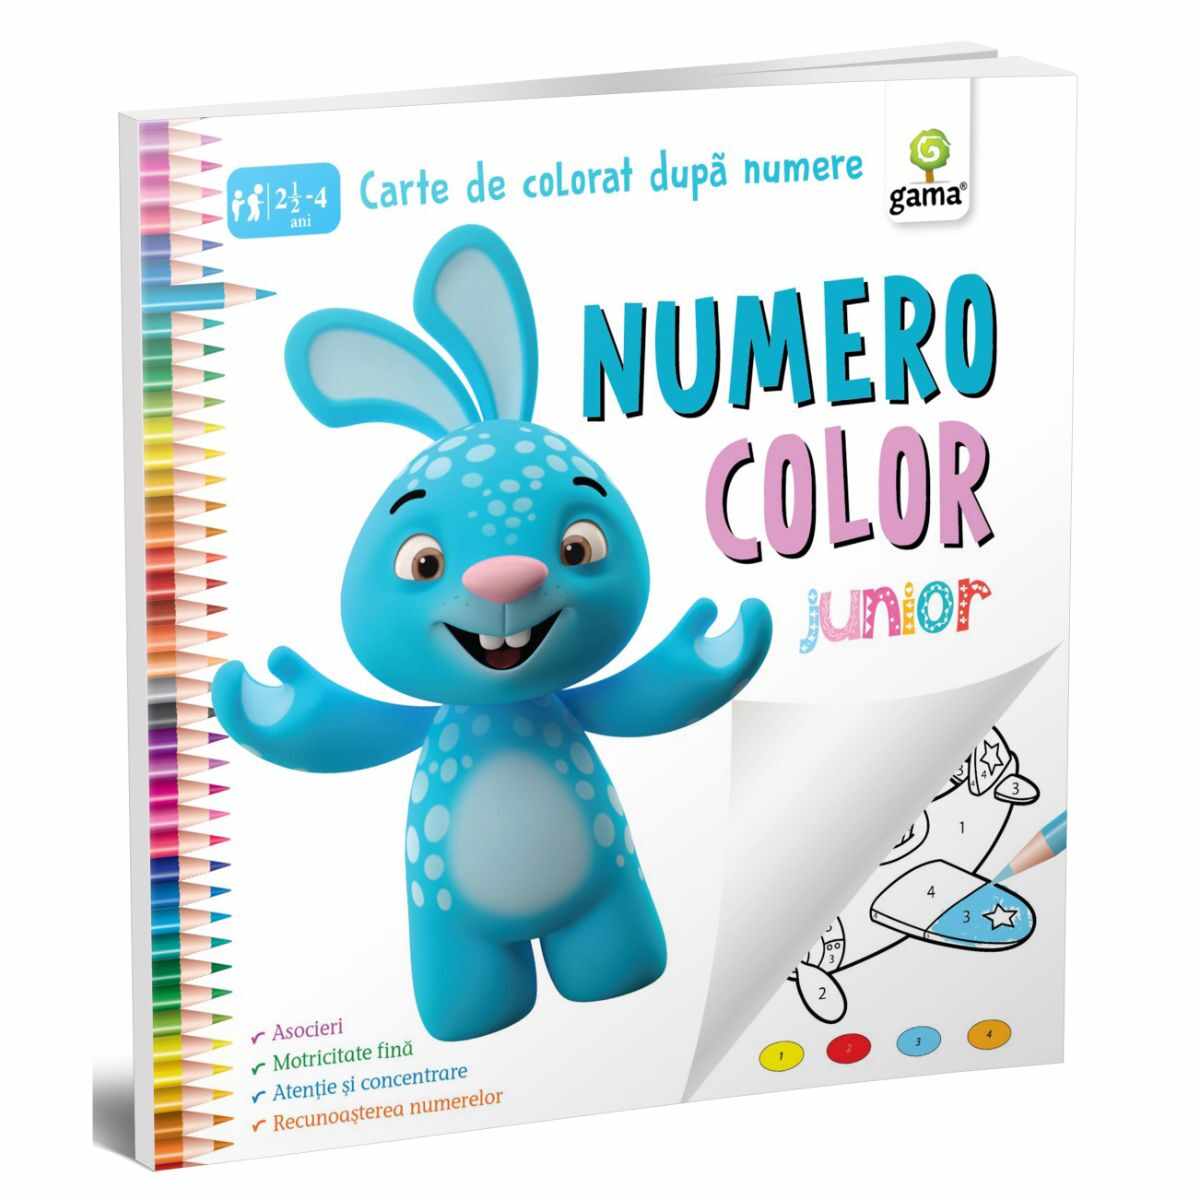 Numero Color junior, carte de colorat dupa numere